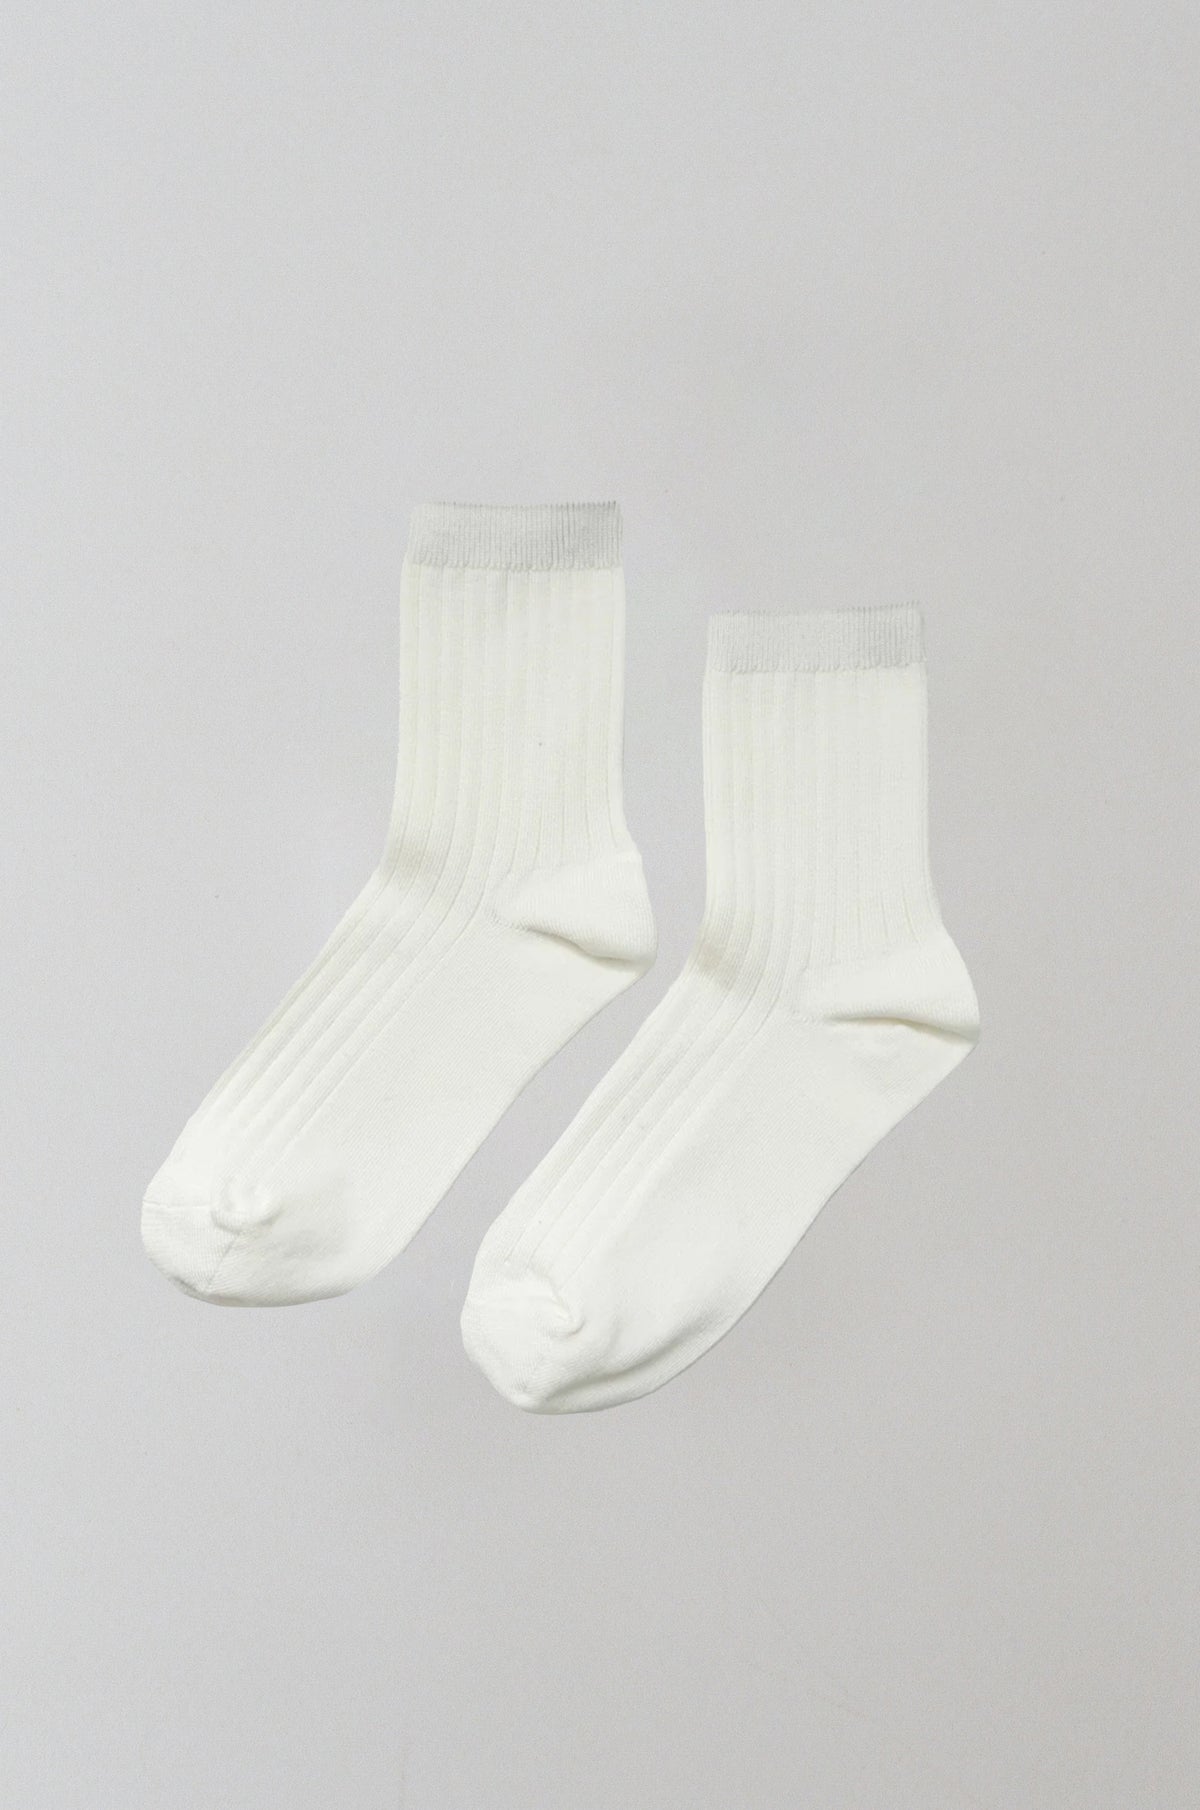 Her Socks - White - By Le Bon